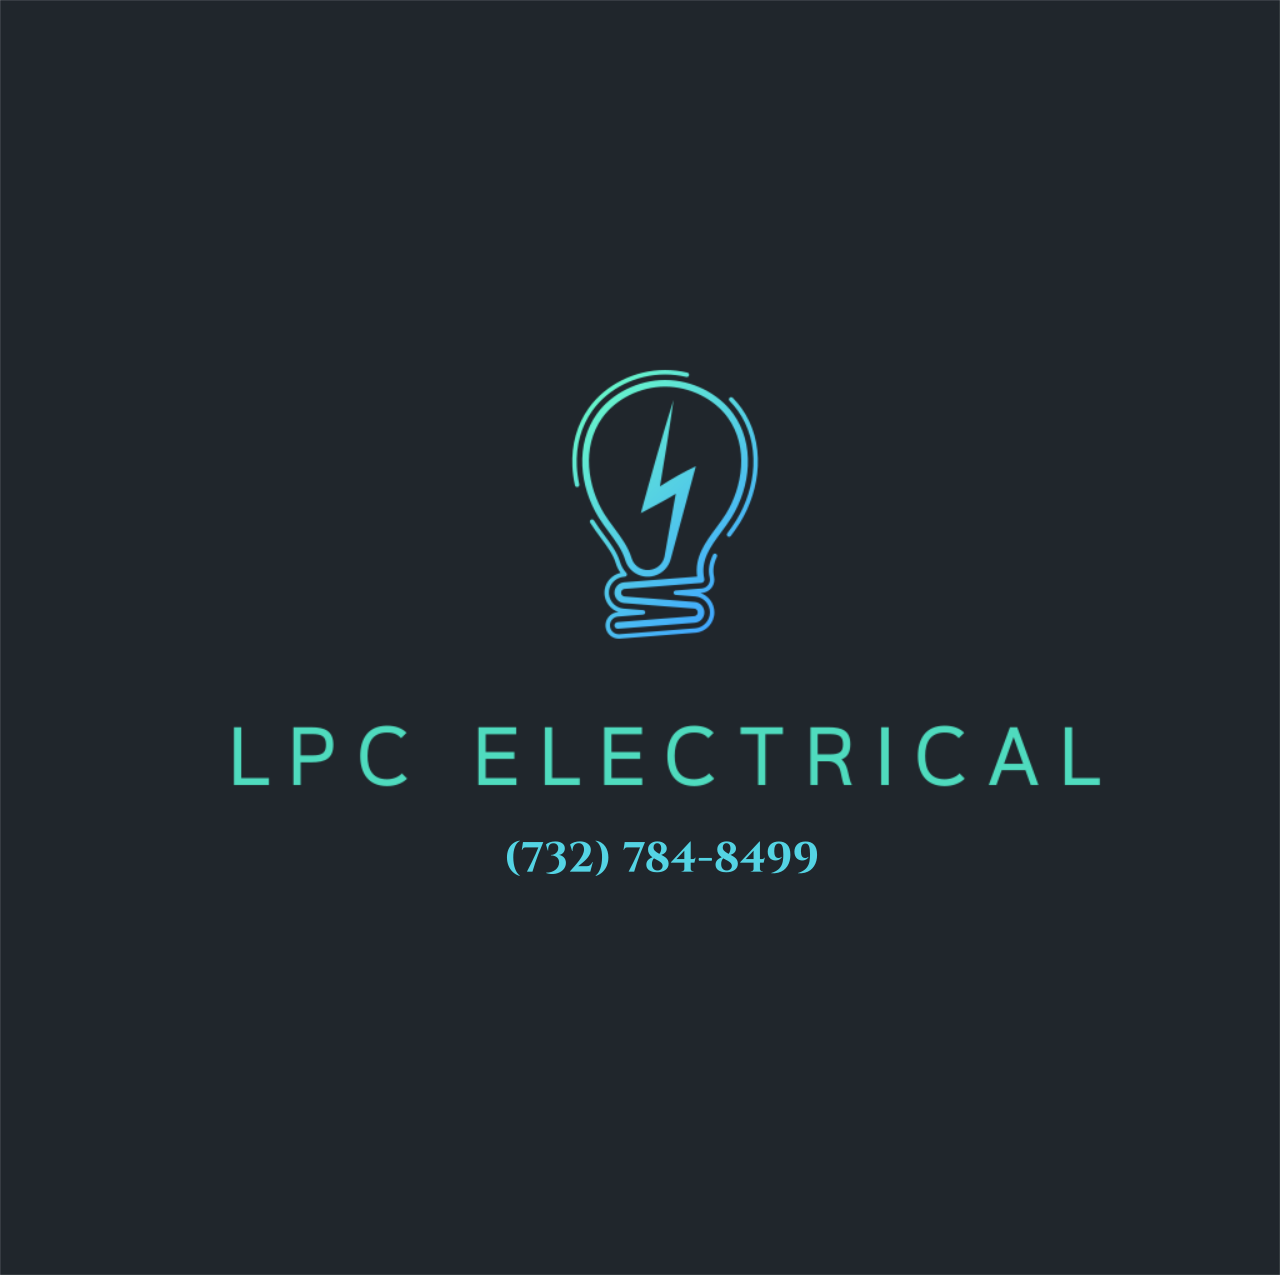 LPC ELECTRICAL's web page